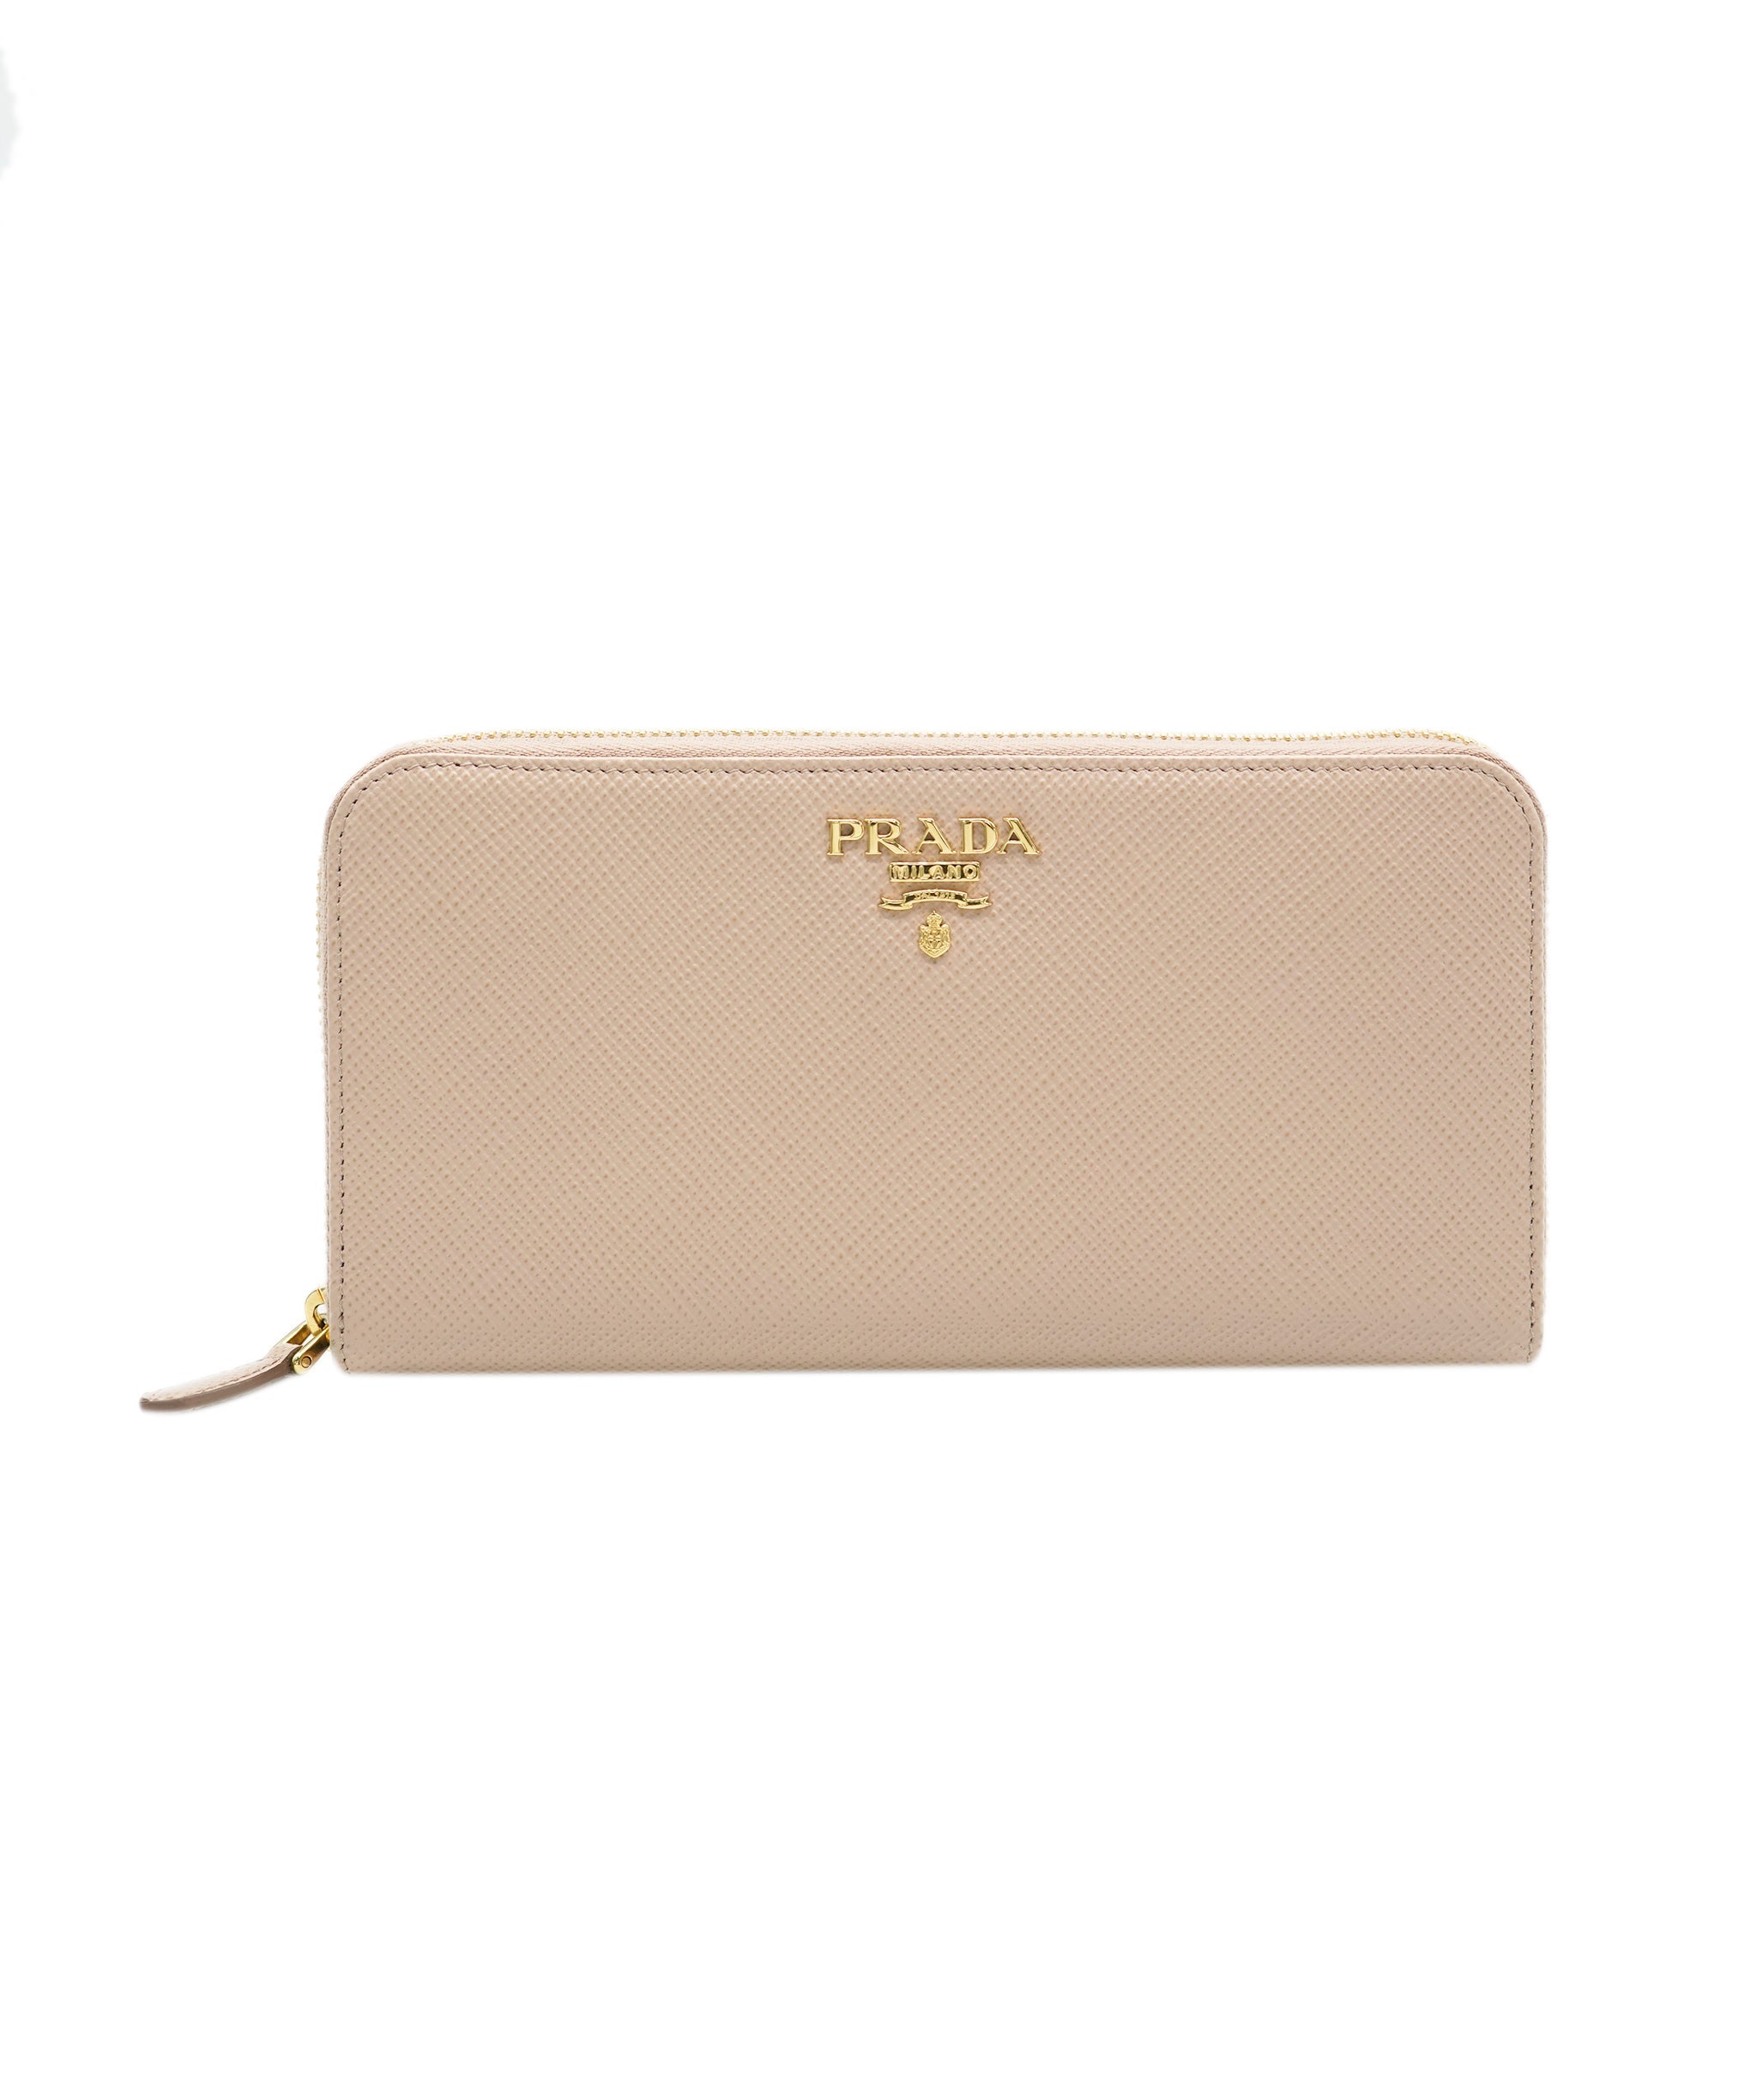 Prada Prada pink beige large saffiano zip wallet with GHW - AJC0652